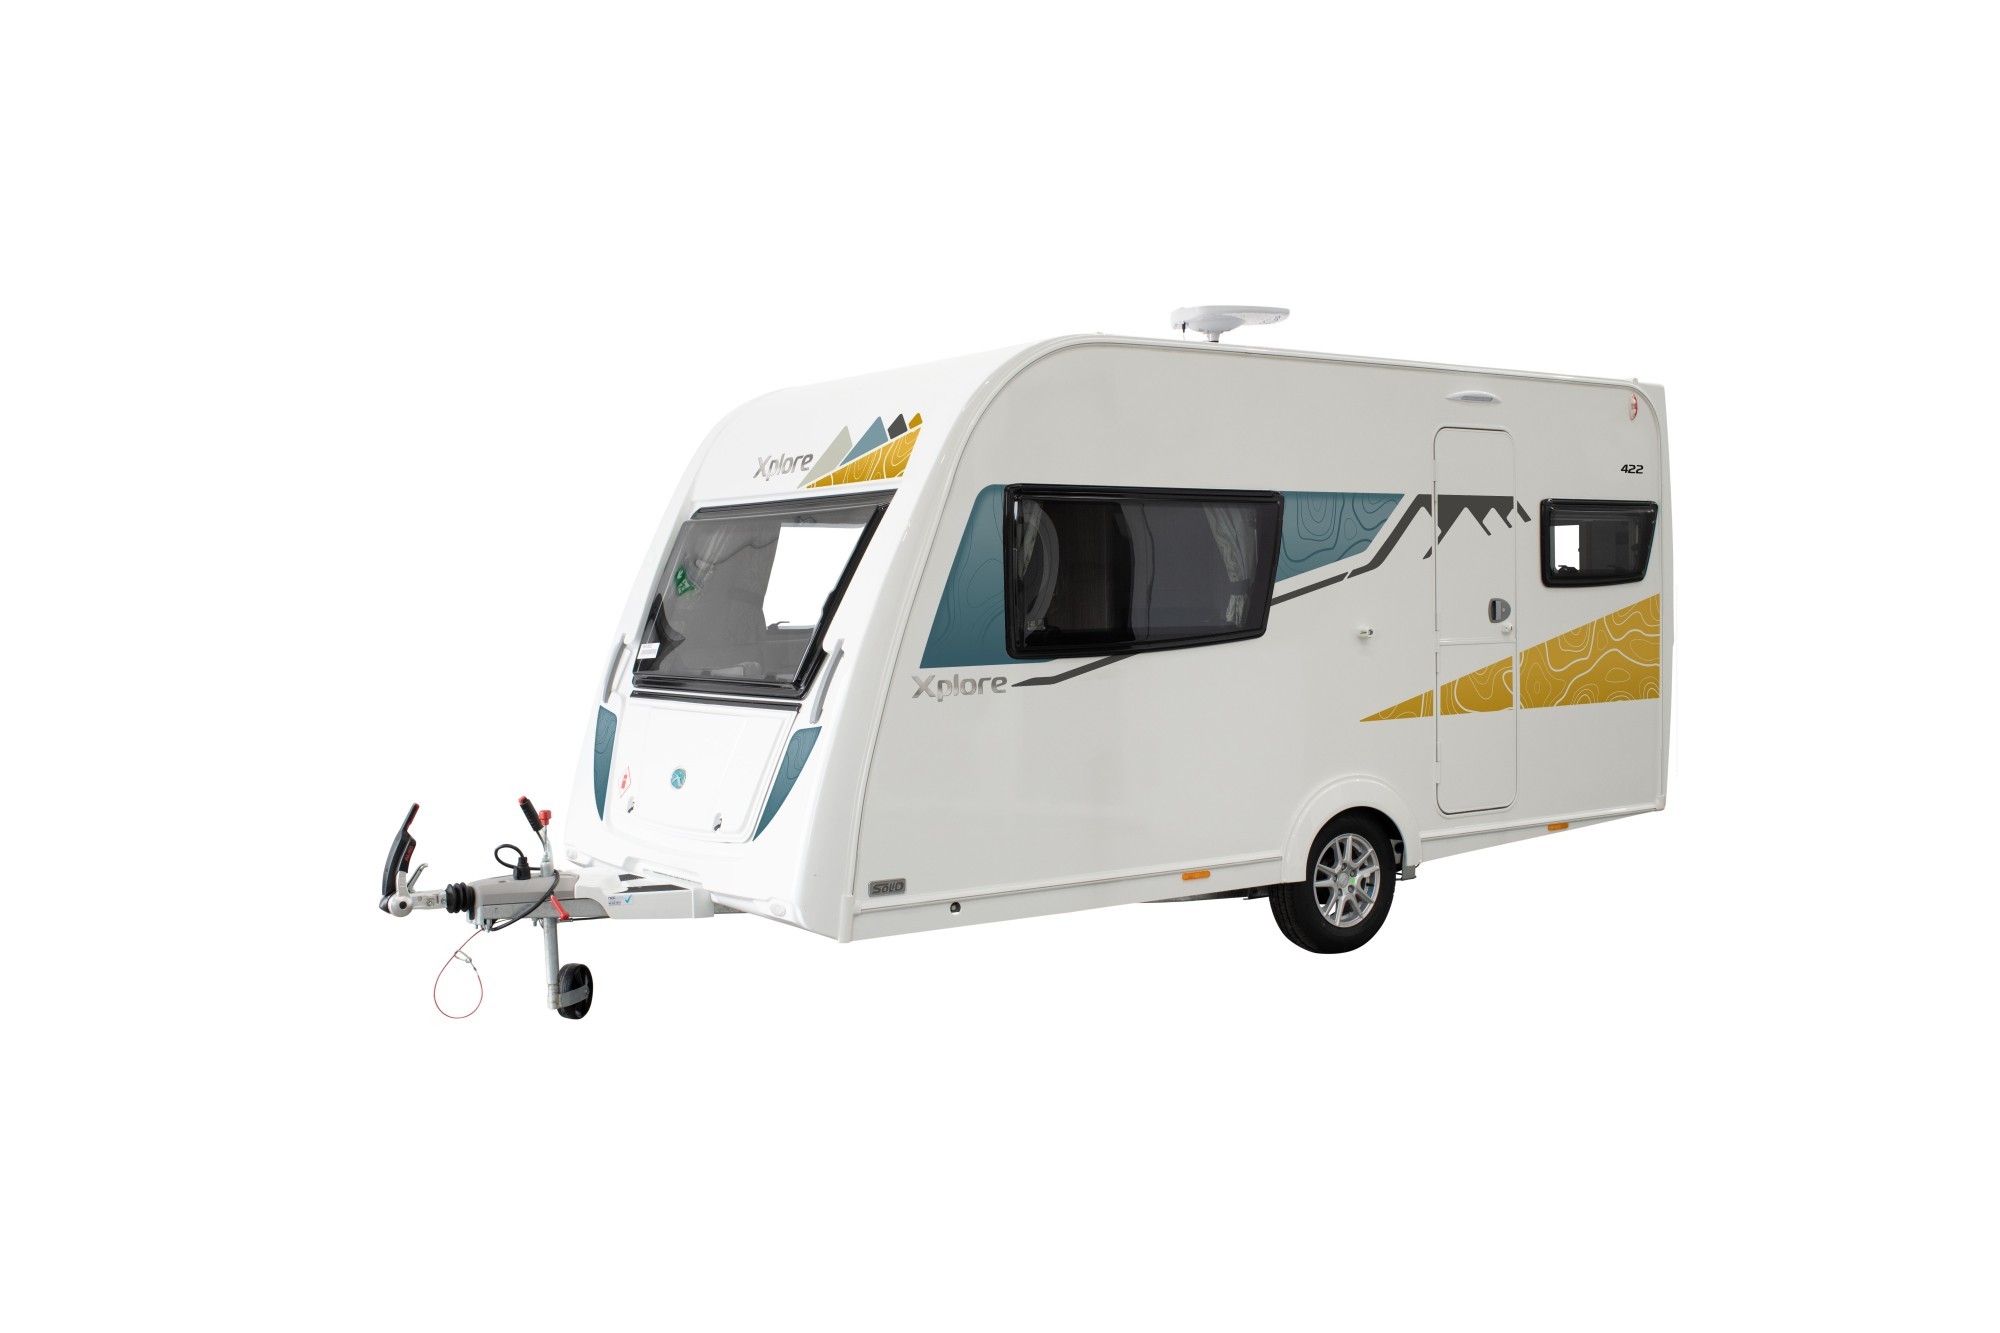 Explore our award-winning range of Swift touring caravans